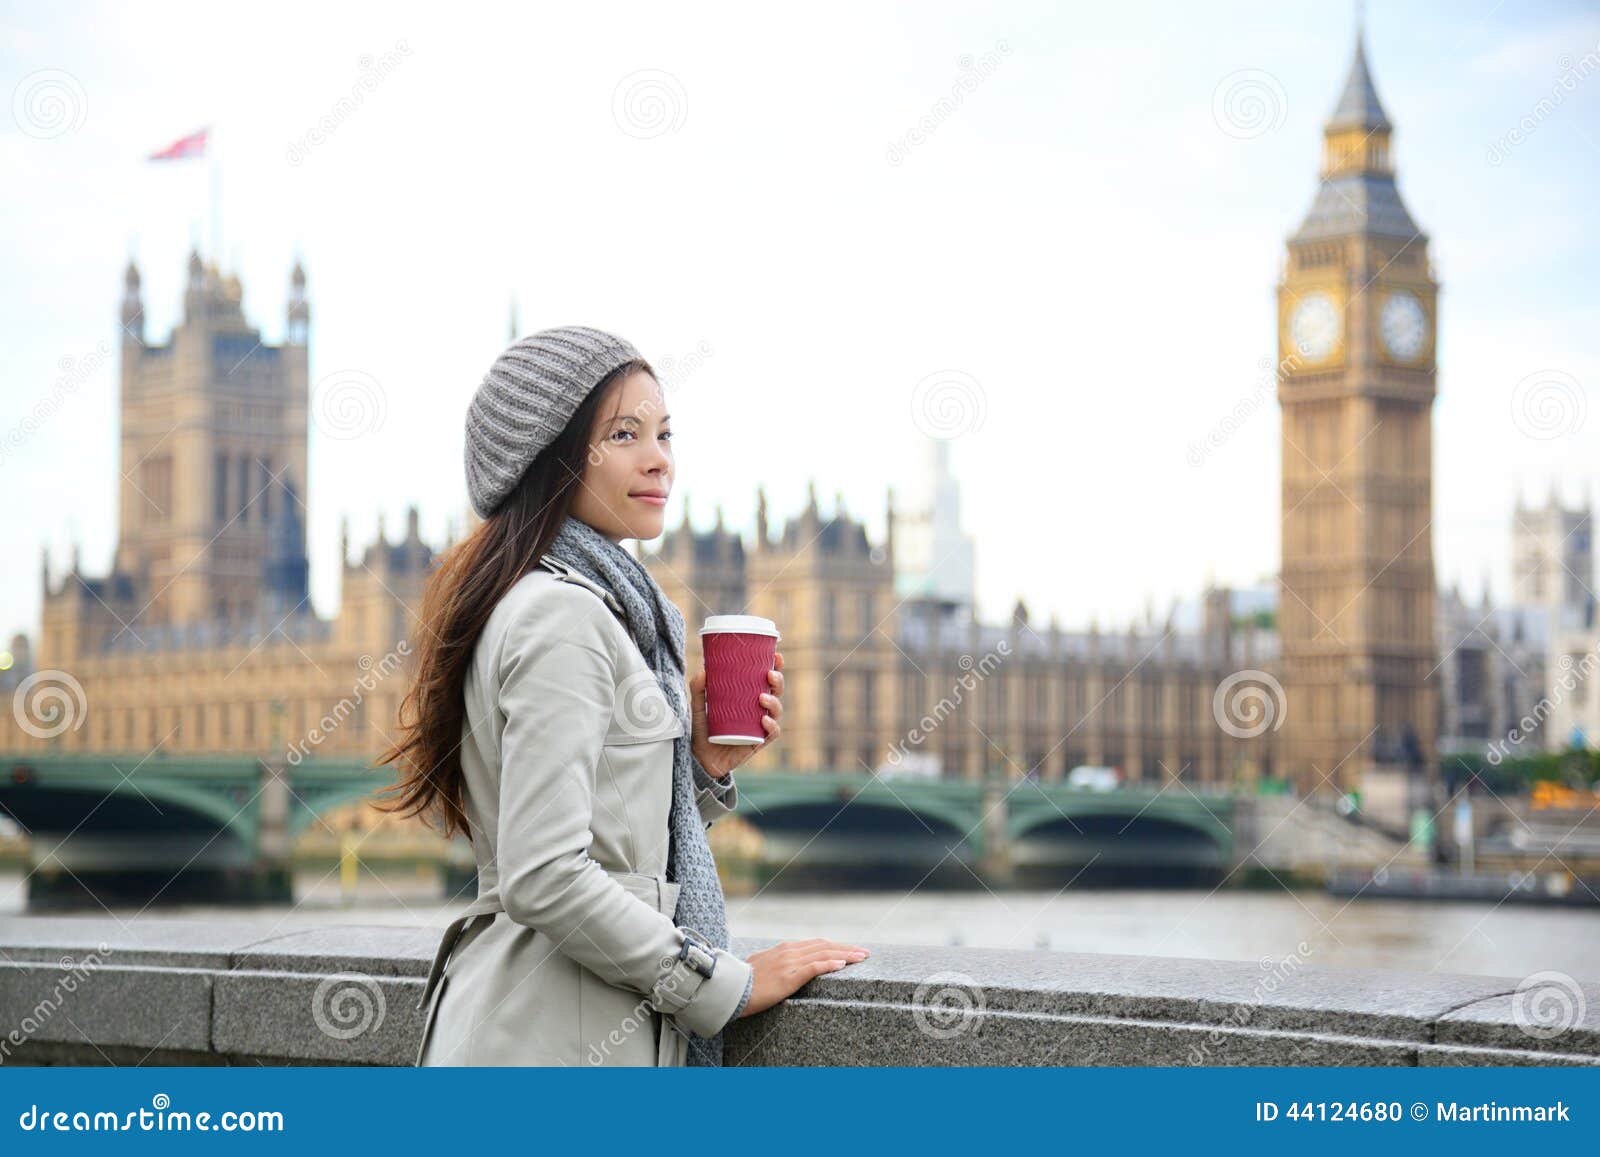 London Woman Drinking Coffee By Westminster Bridge Stock